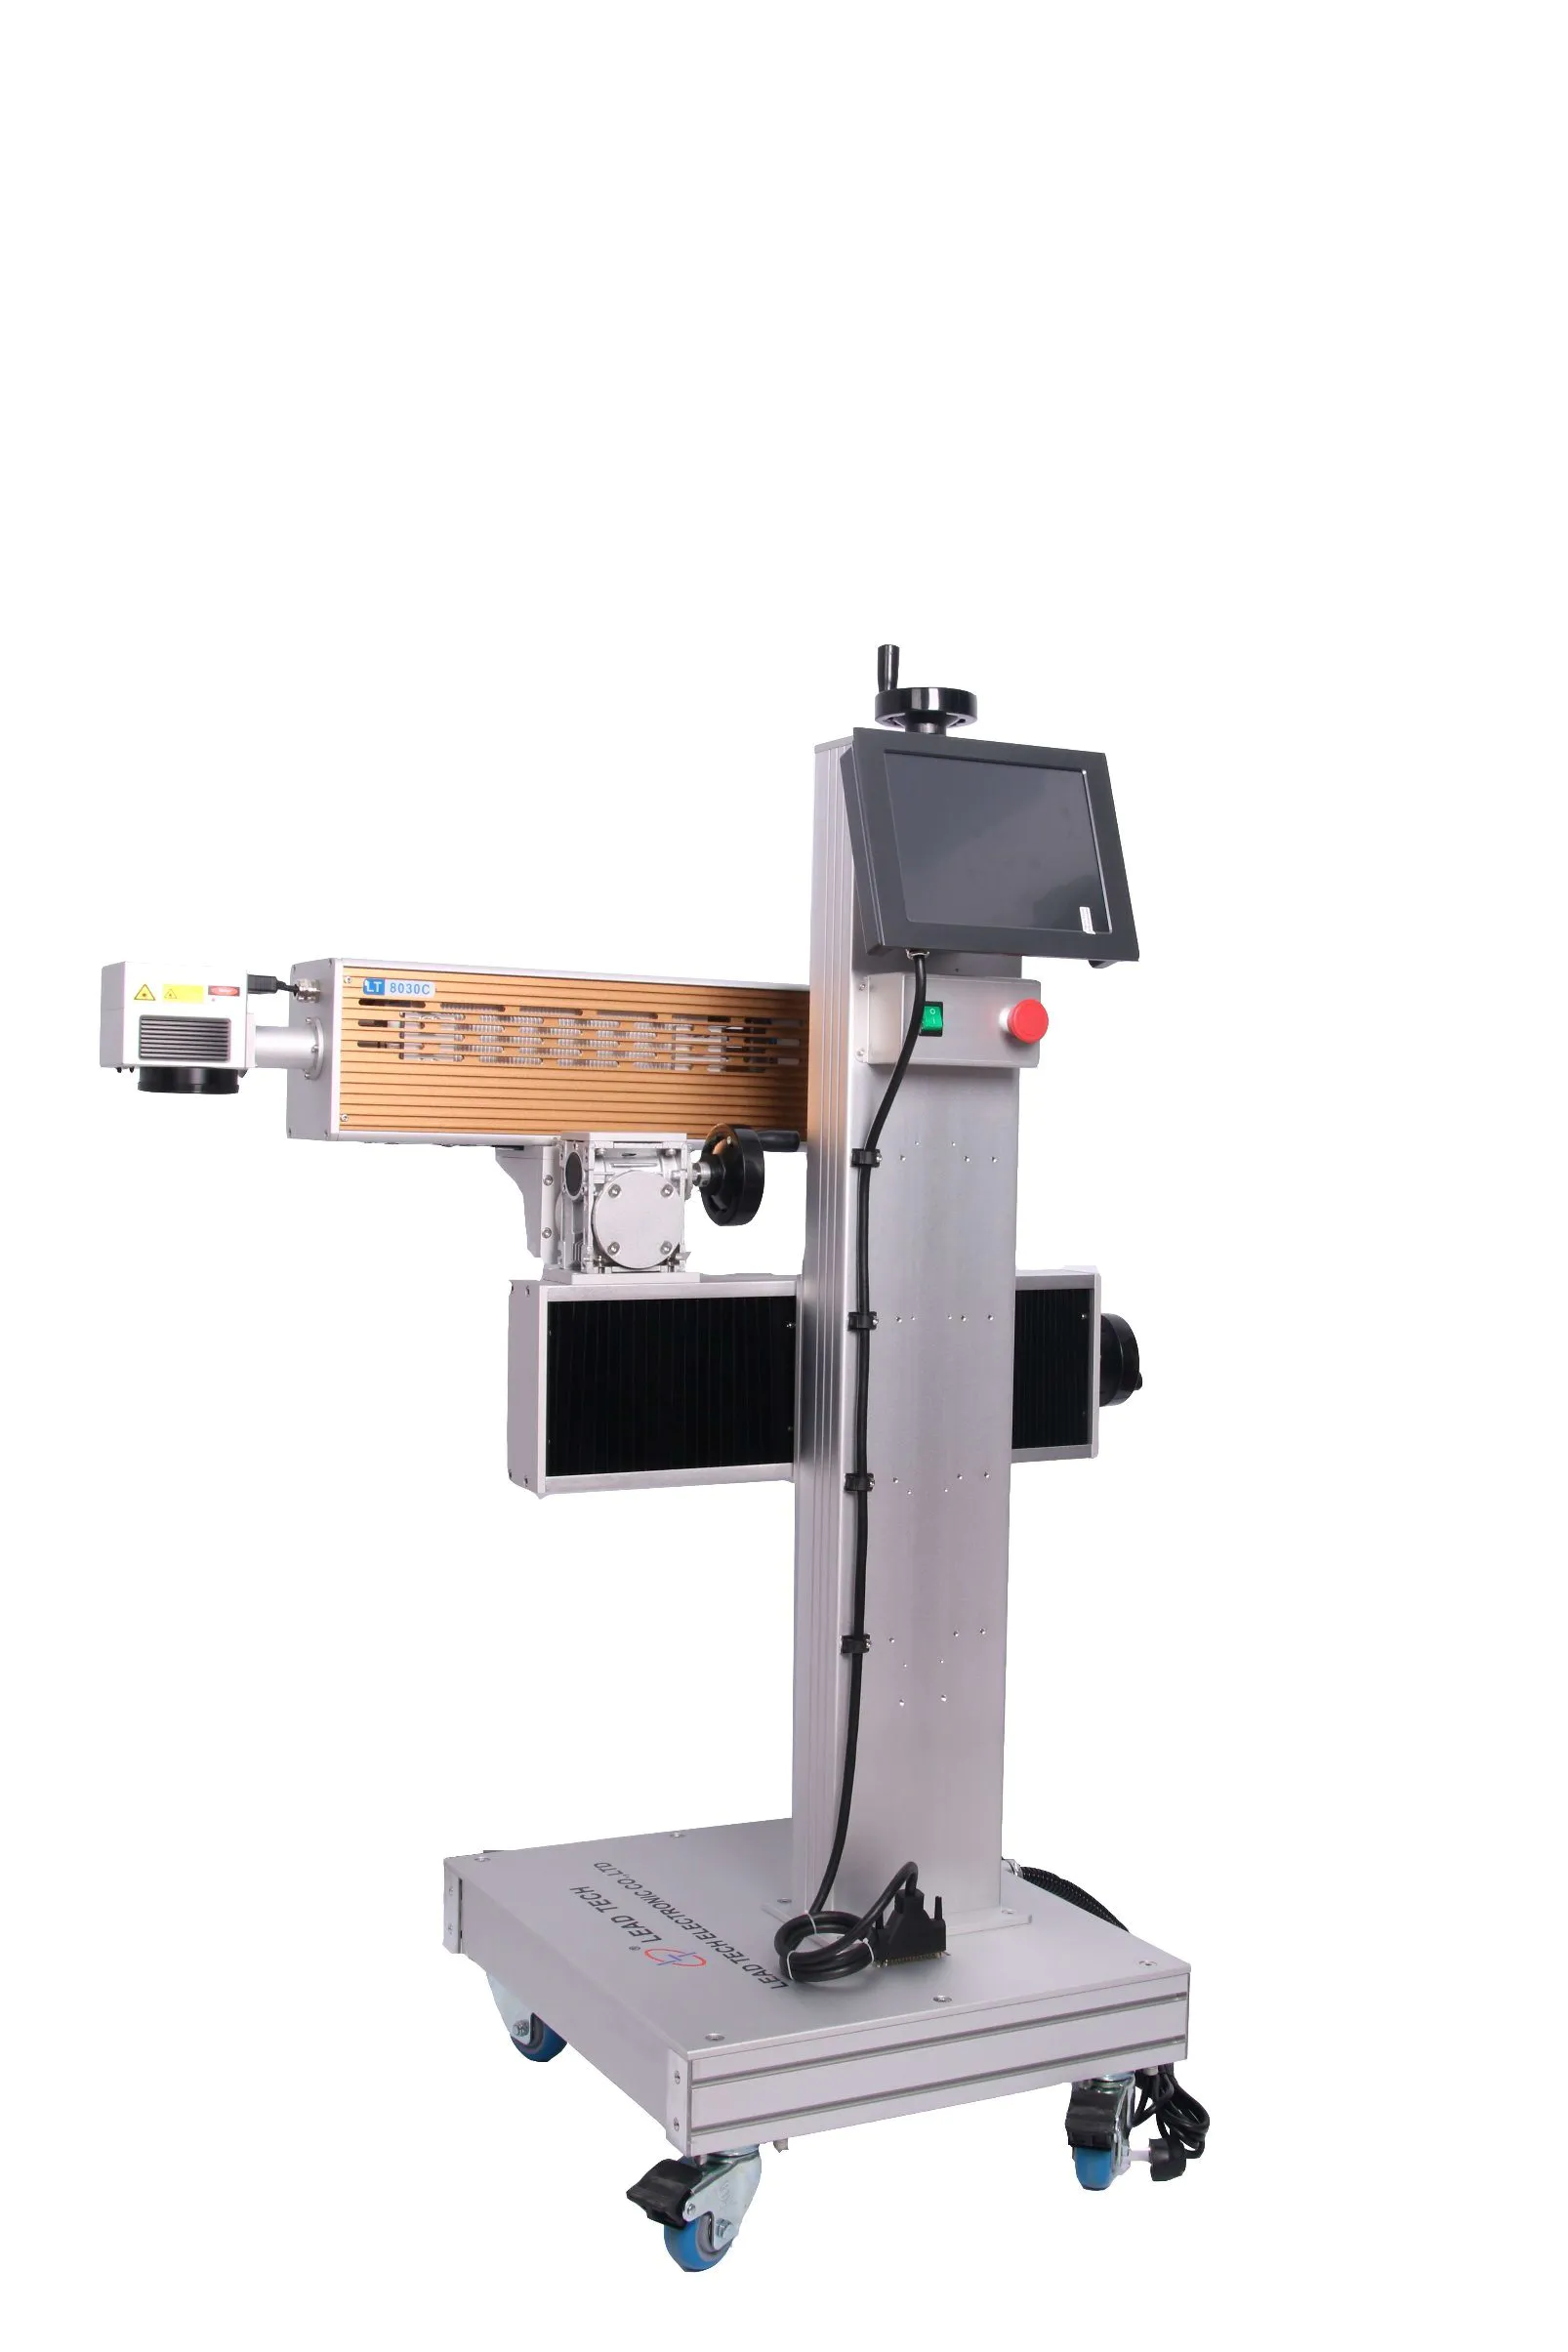 Lt8020c/Lt8030c CO2 20W/30W High Performance Digital IC Laser Printer